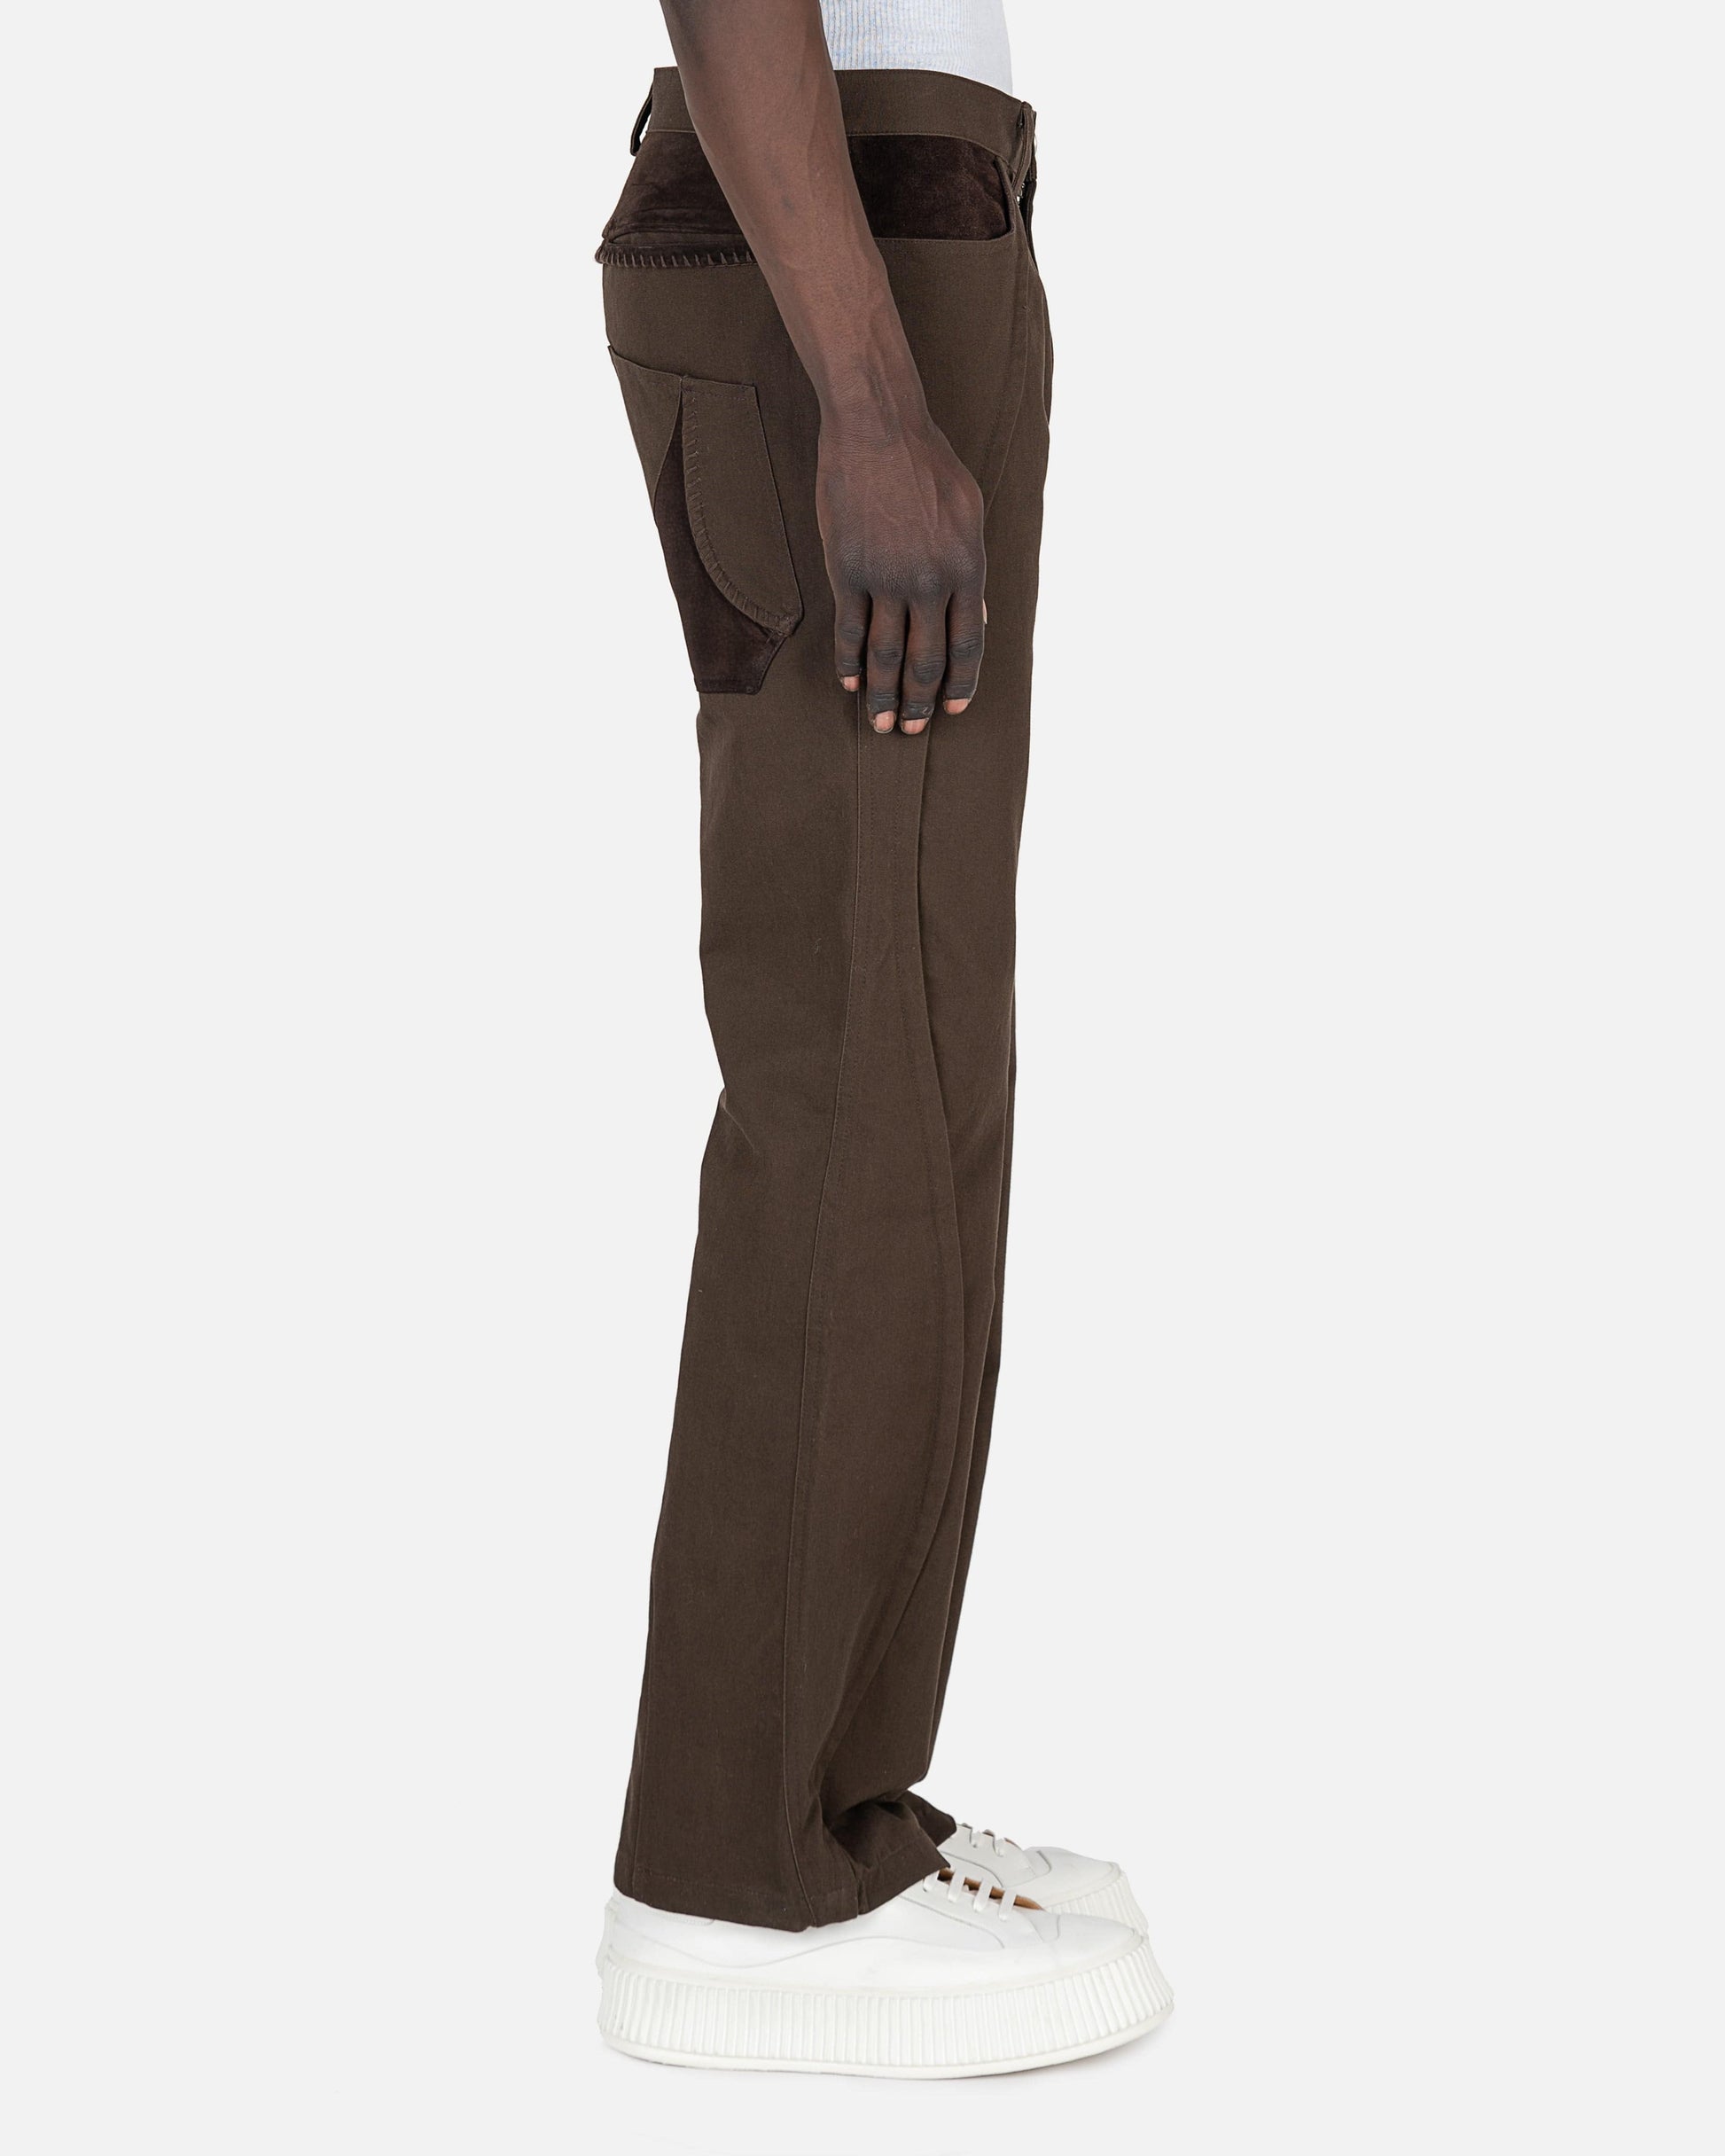 XLIM Men's Pants Ep. 2 02 Trousers in Brown